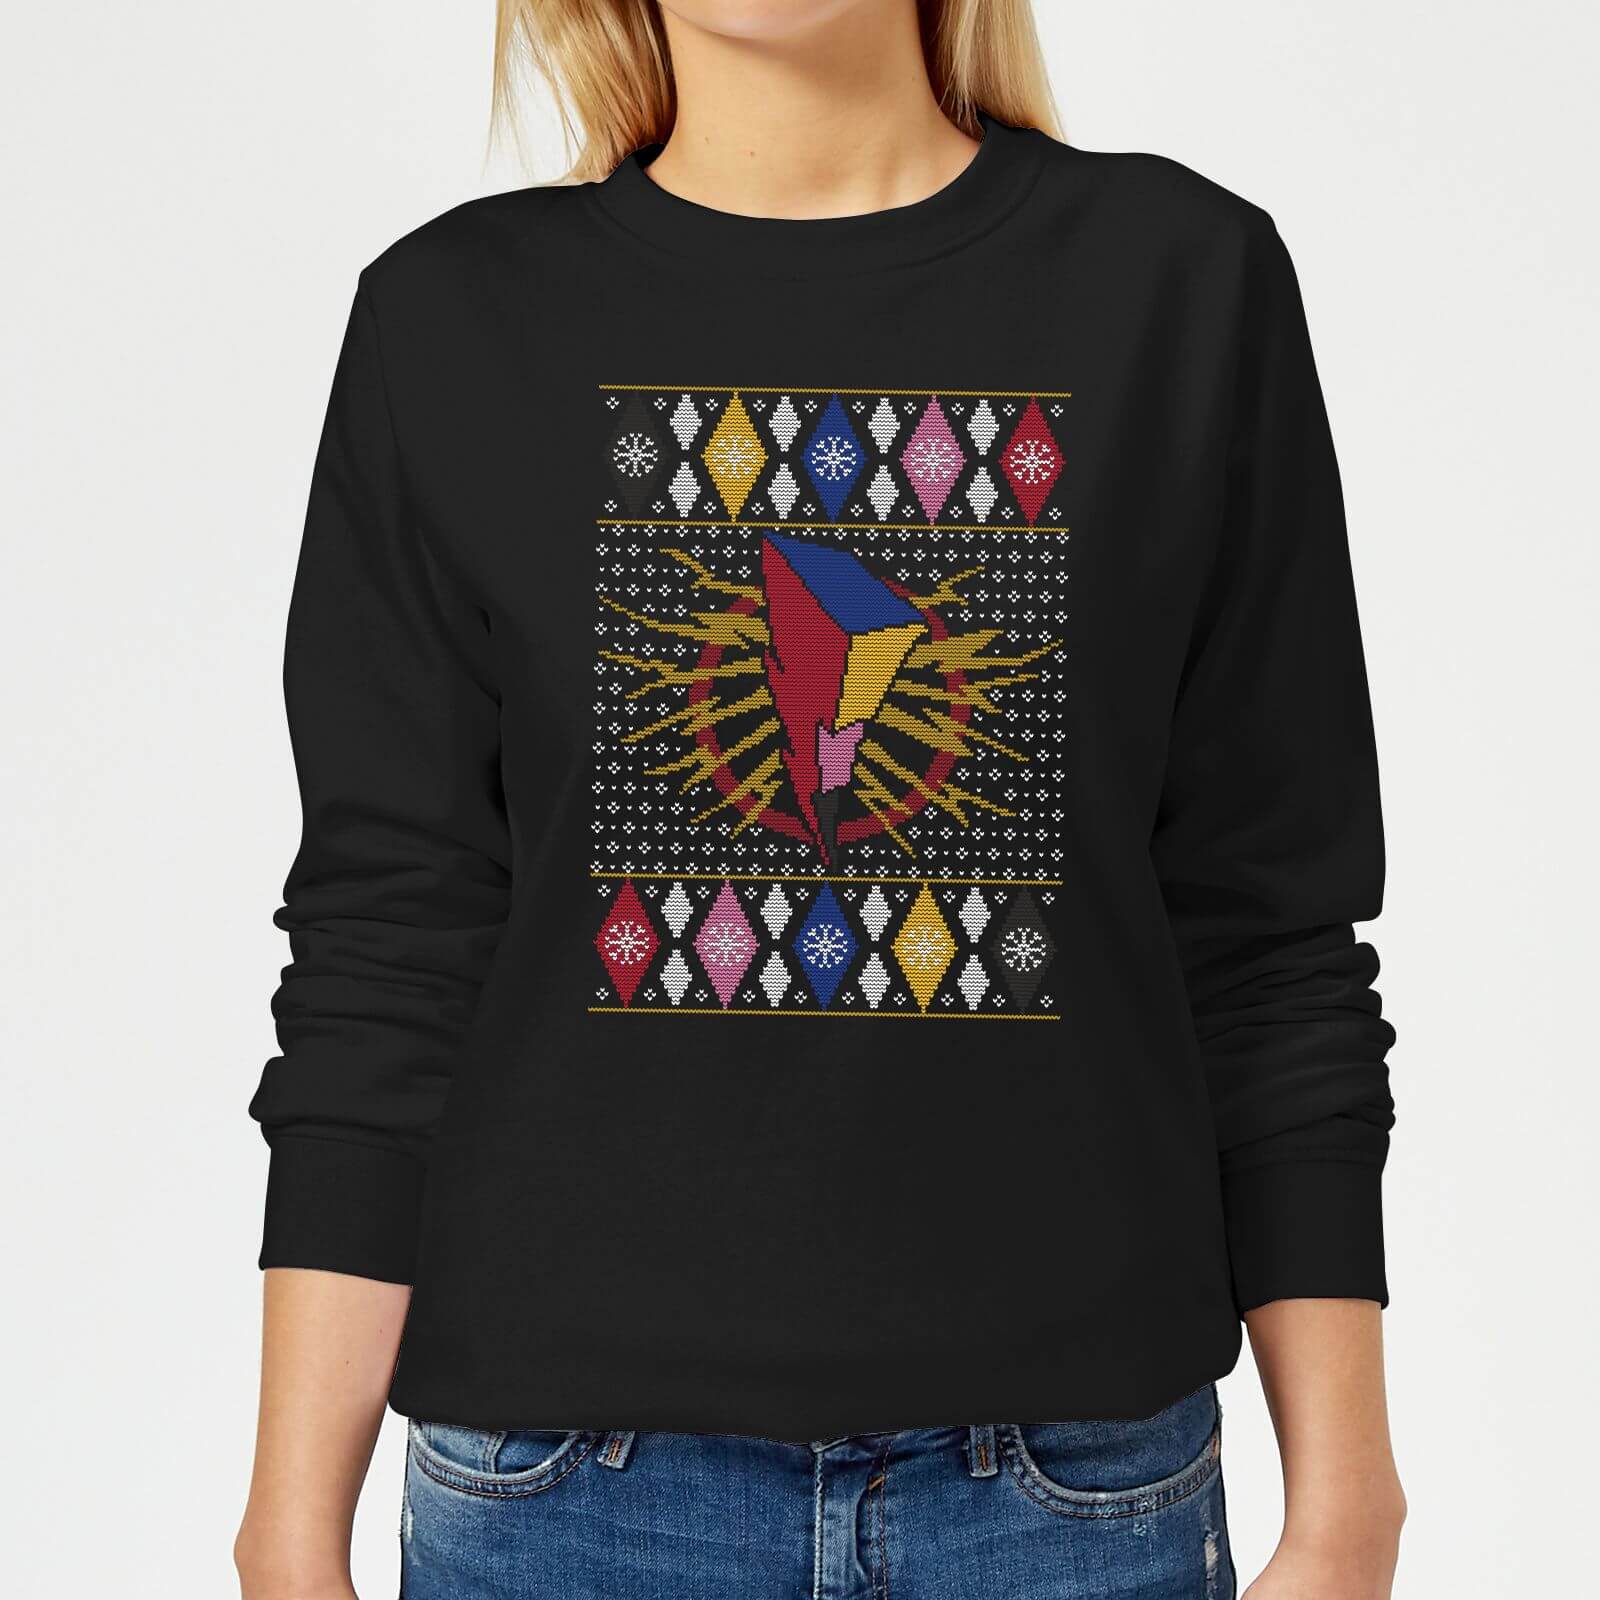 Power Rangers Women's Christmas Sweatshirt - Black - XS - Black